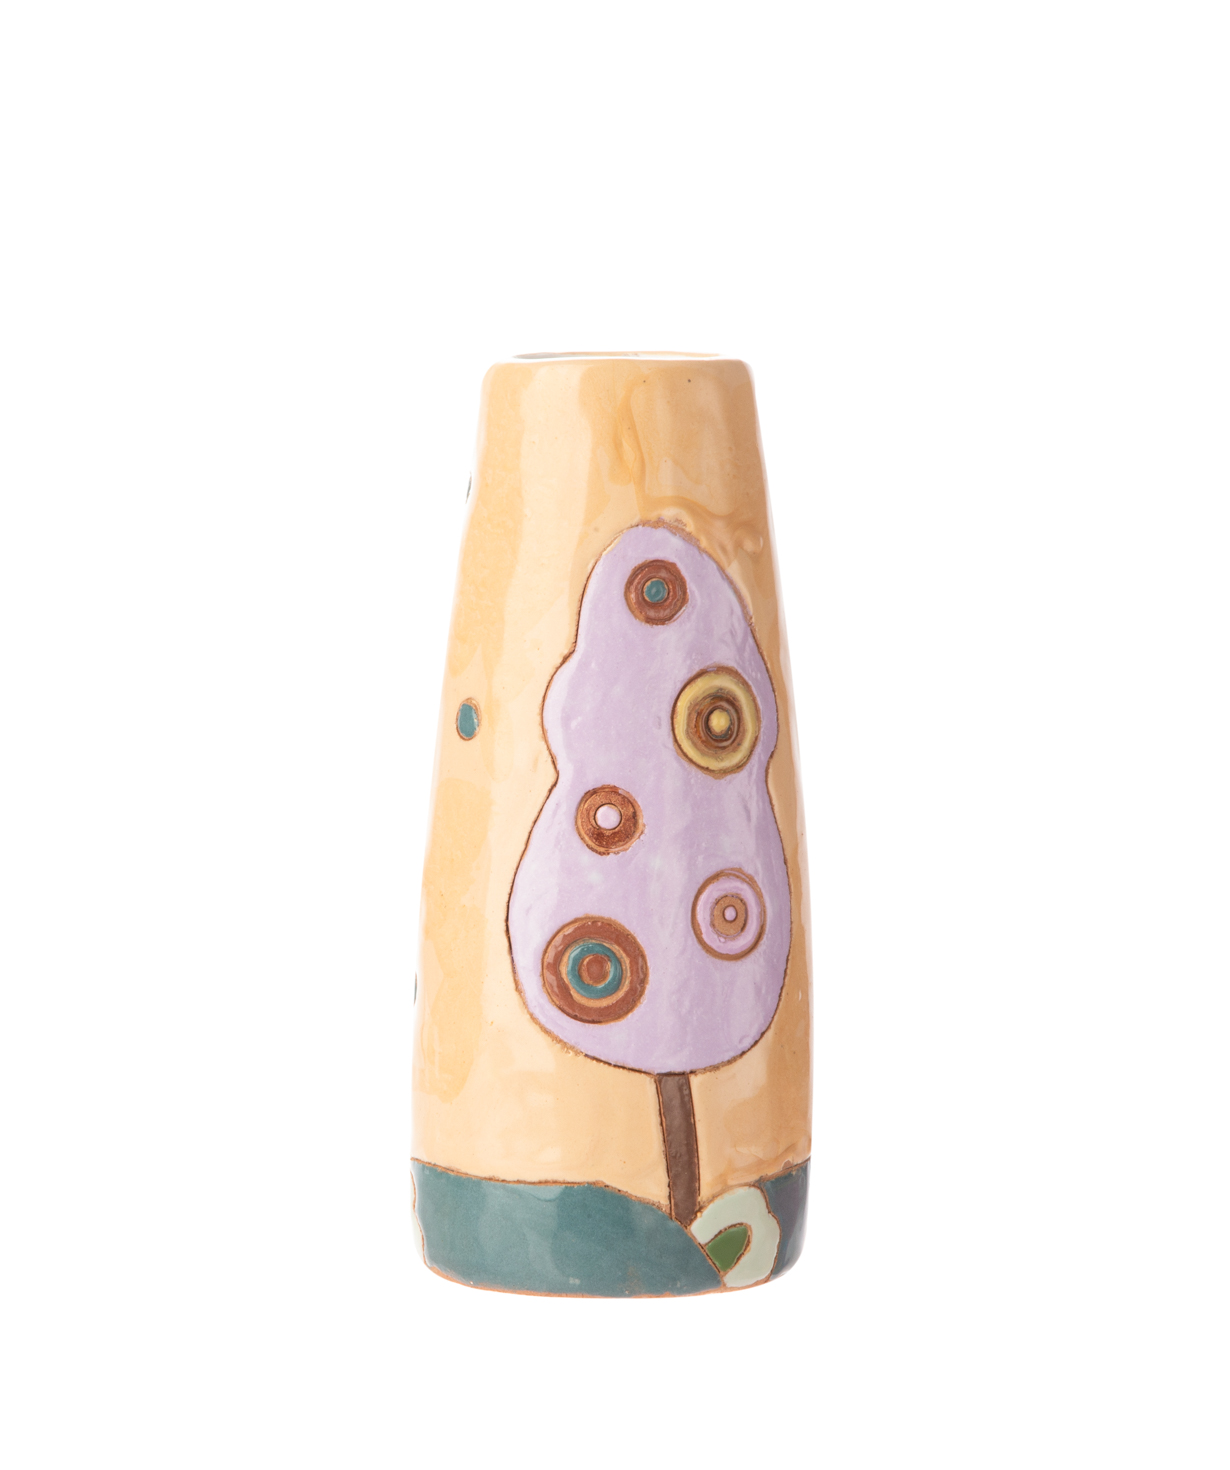 Vase `Nuard Ceramics` for flowers, trees №2